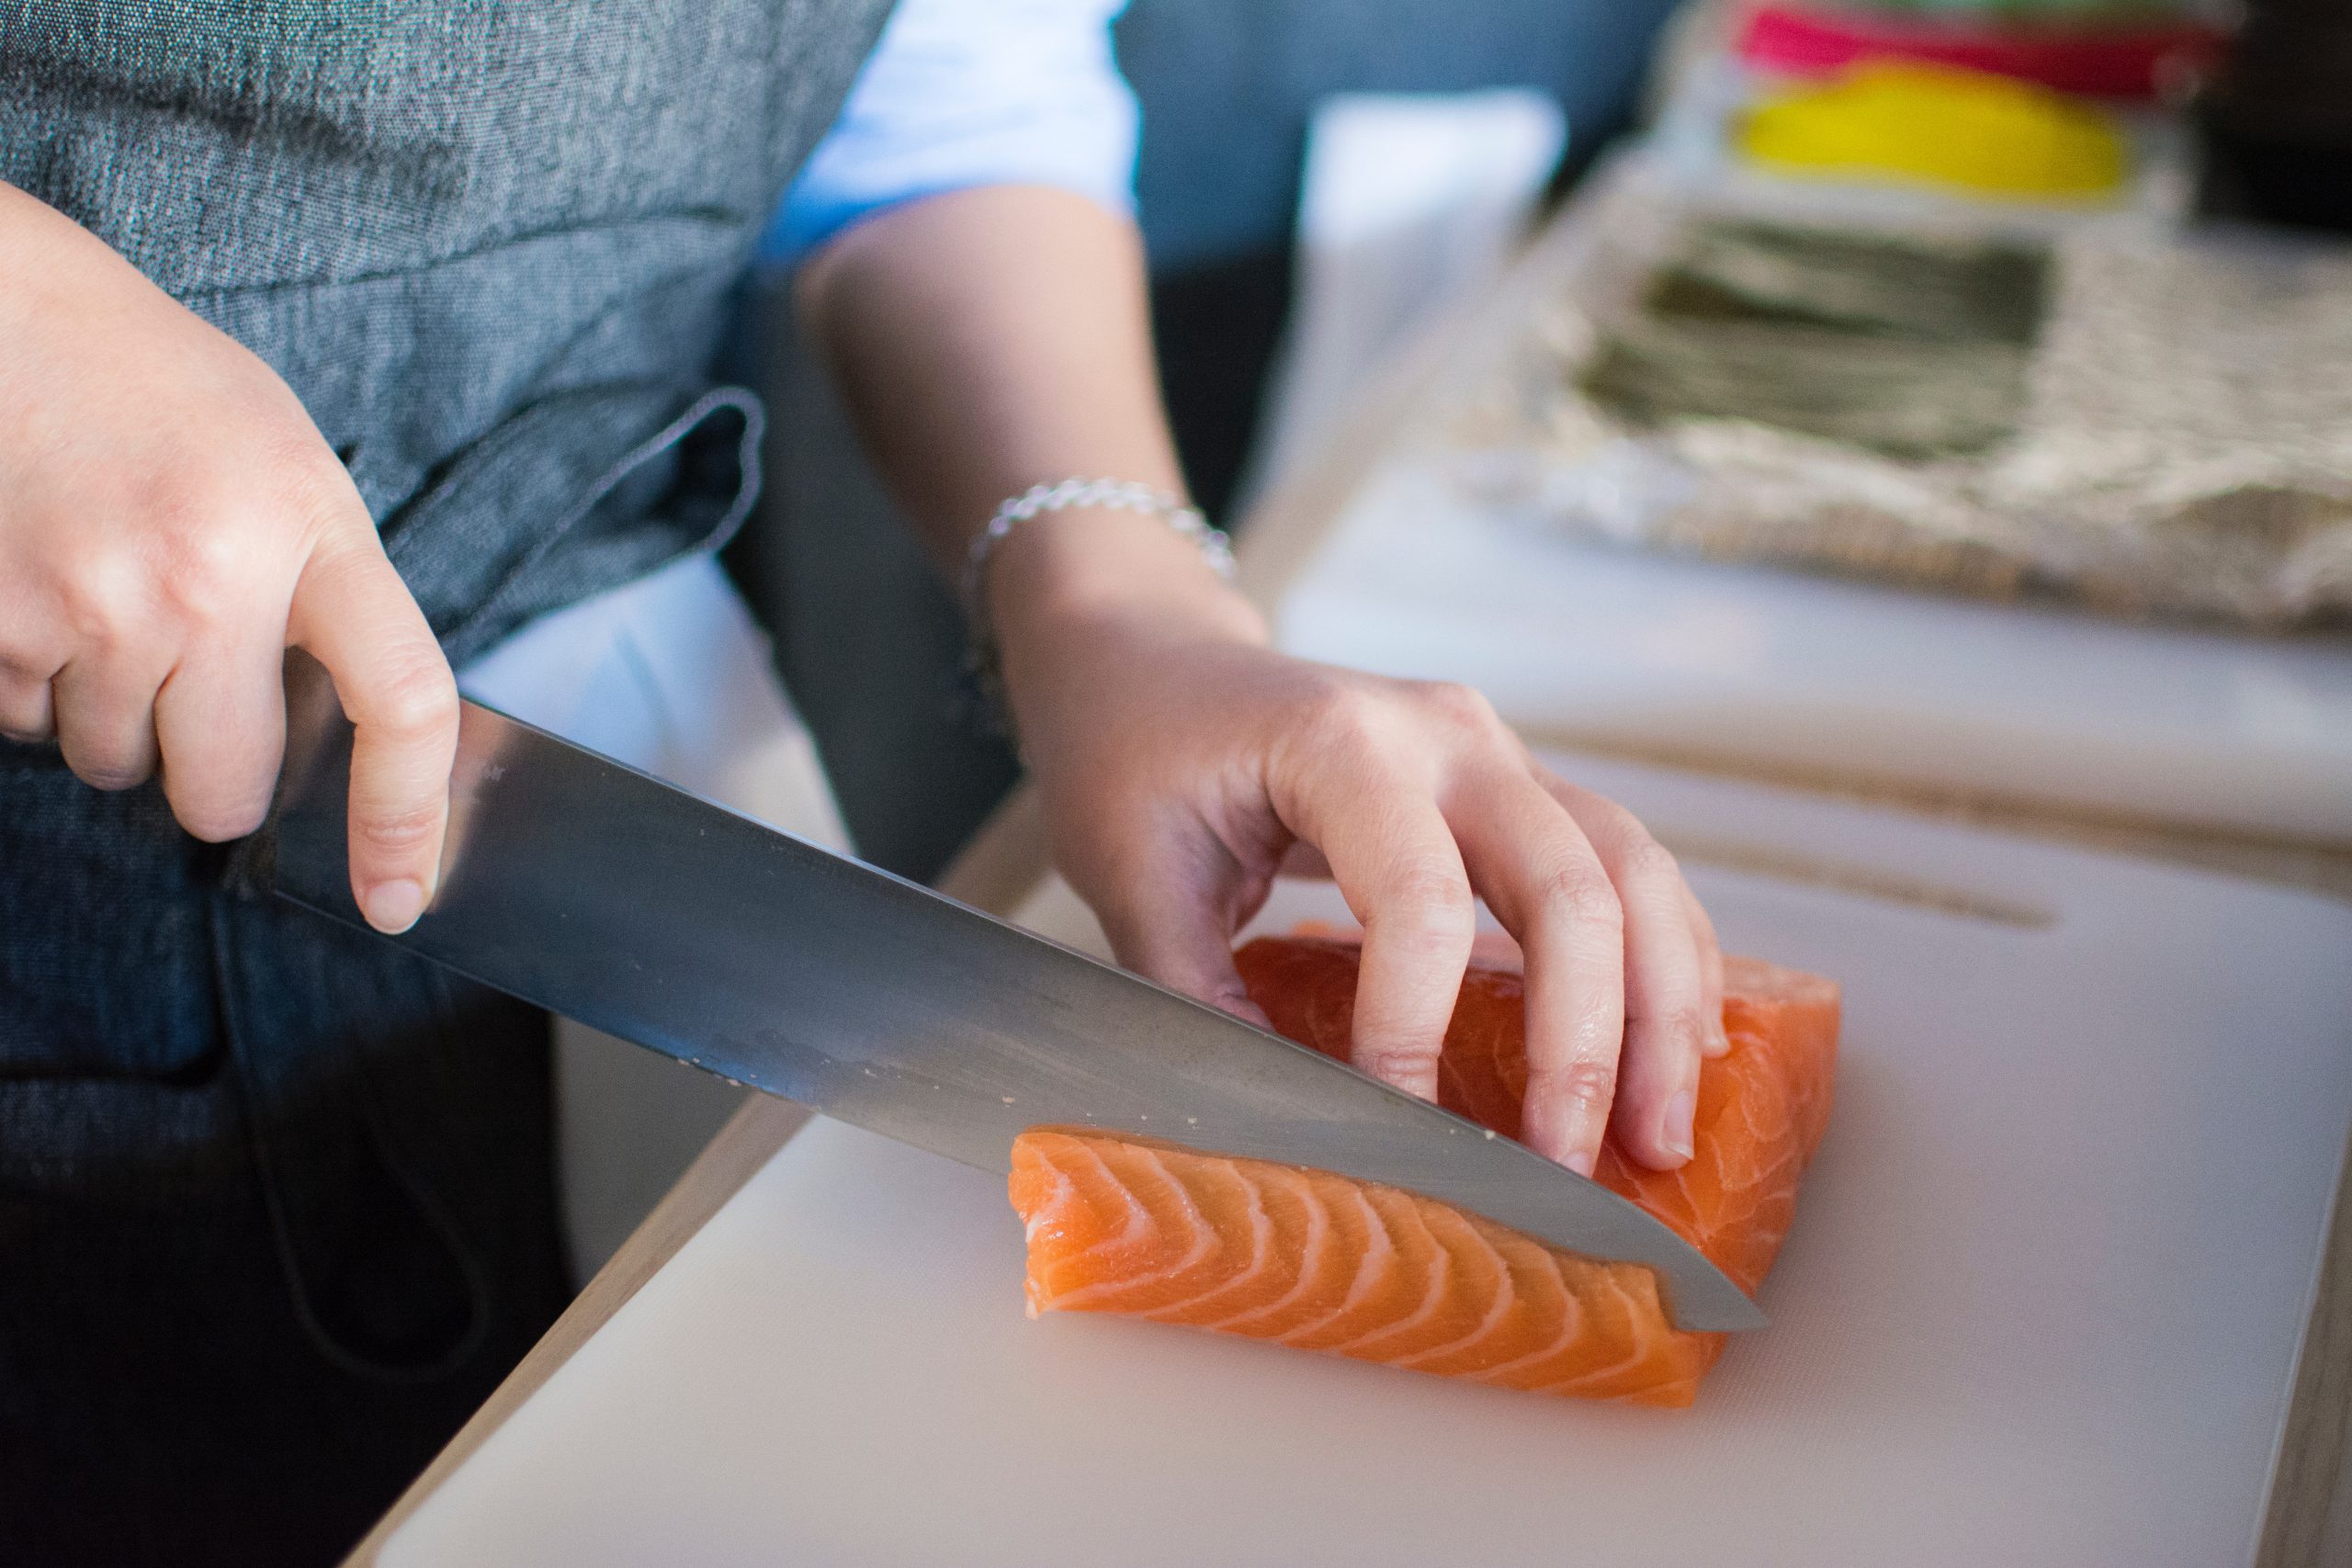 Best keto salmon recipe for 2022